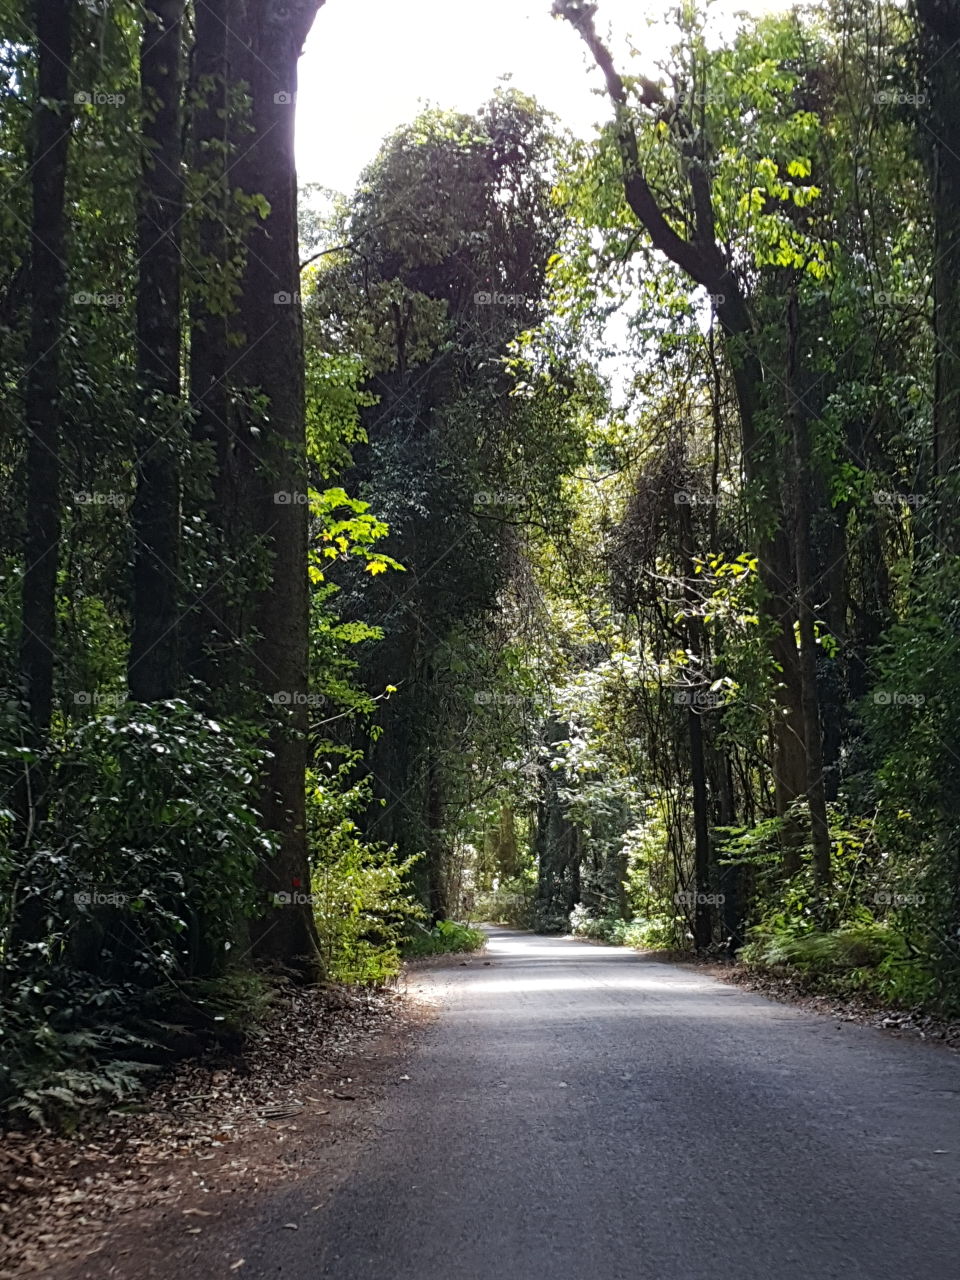 Rainforest roadside